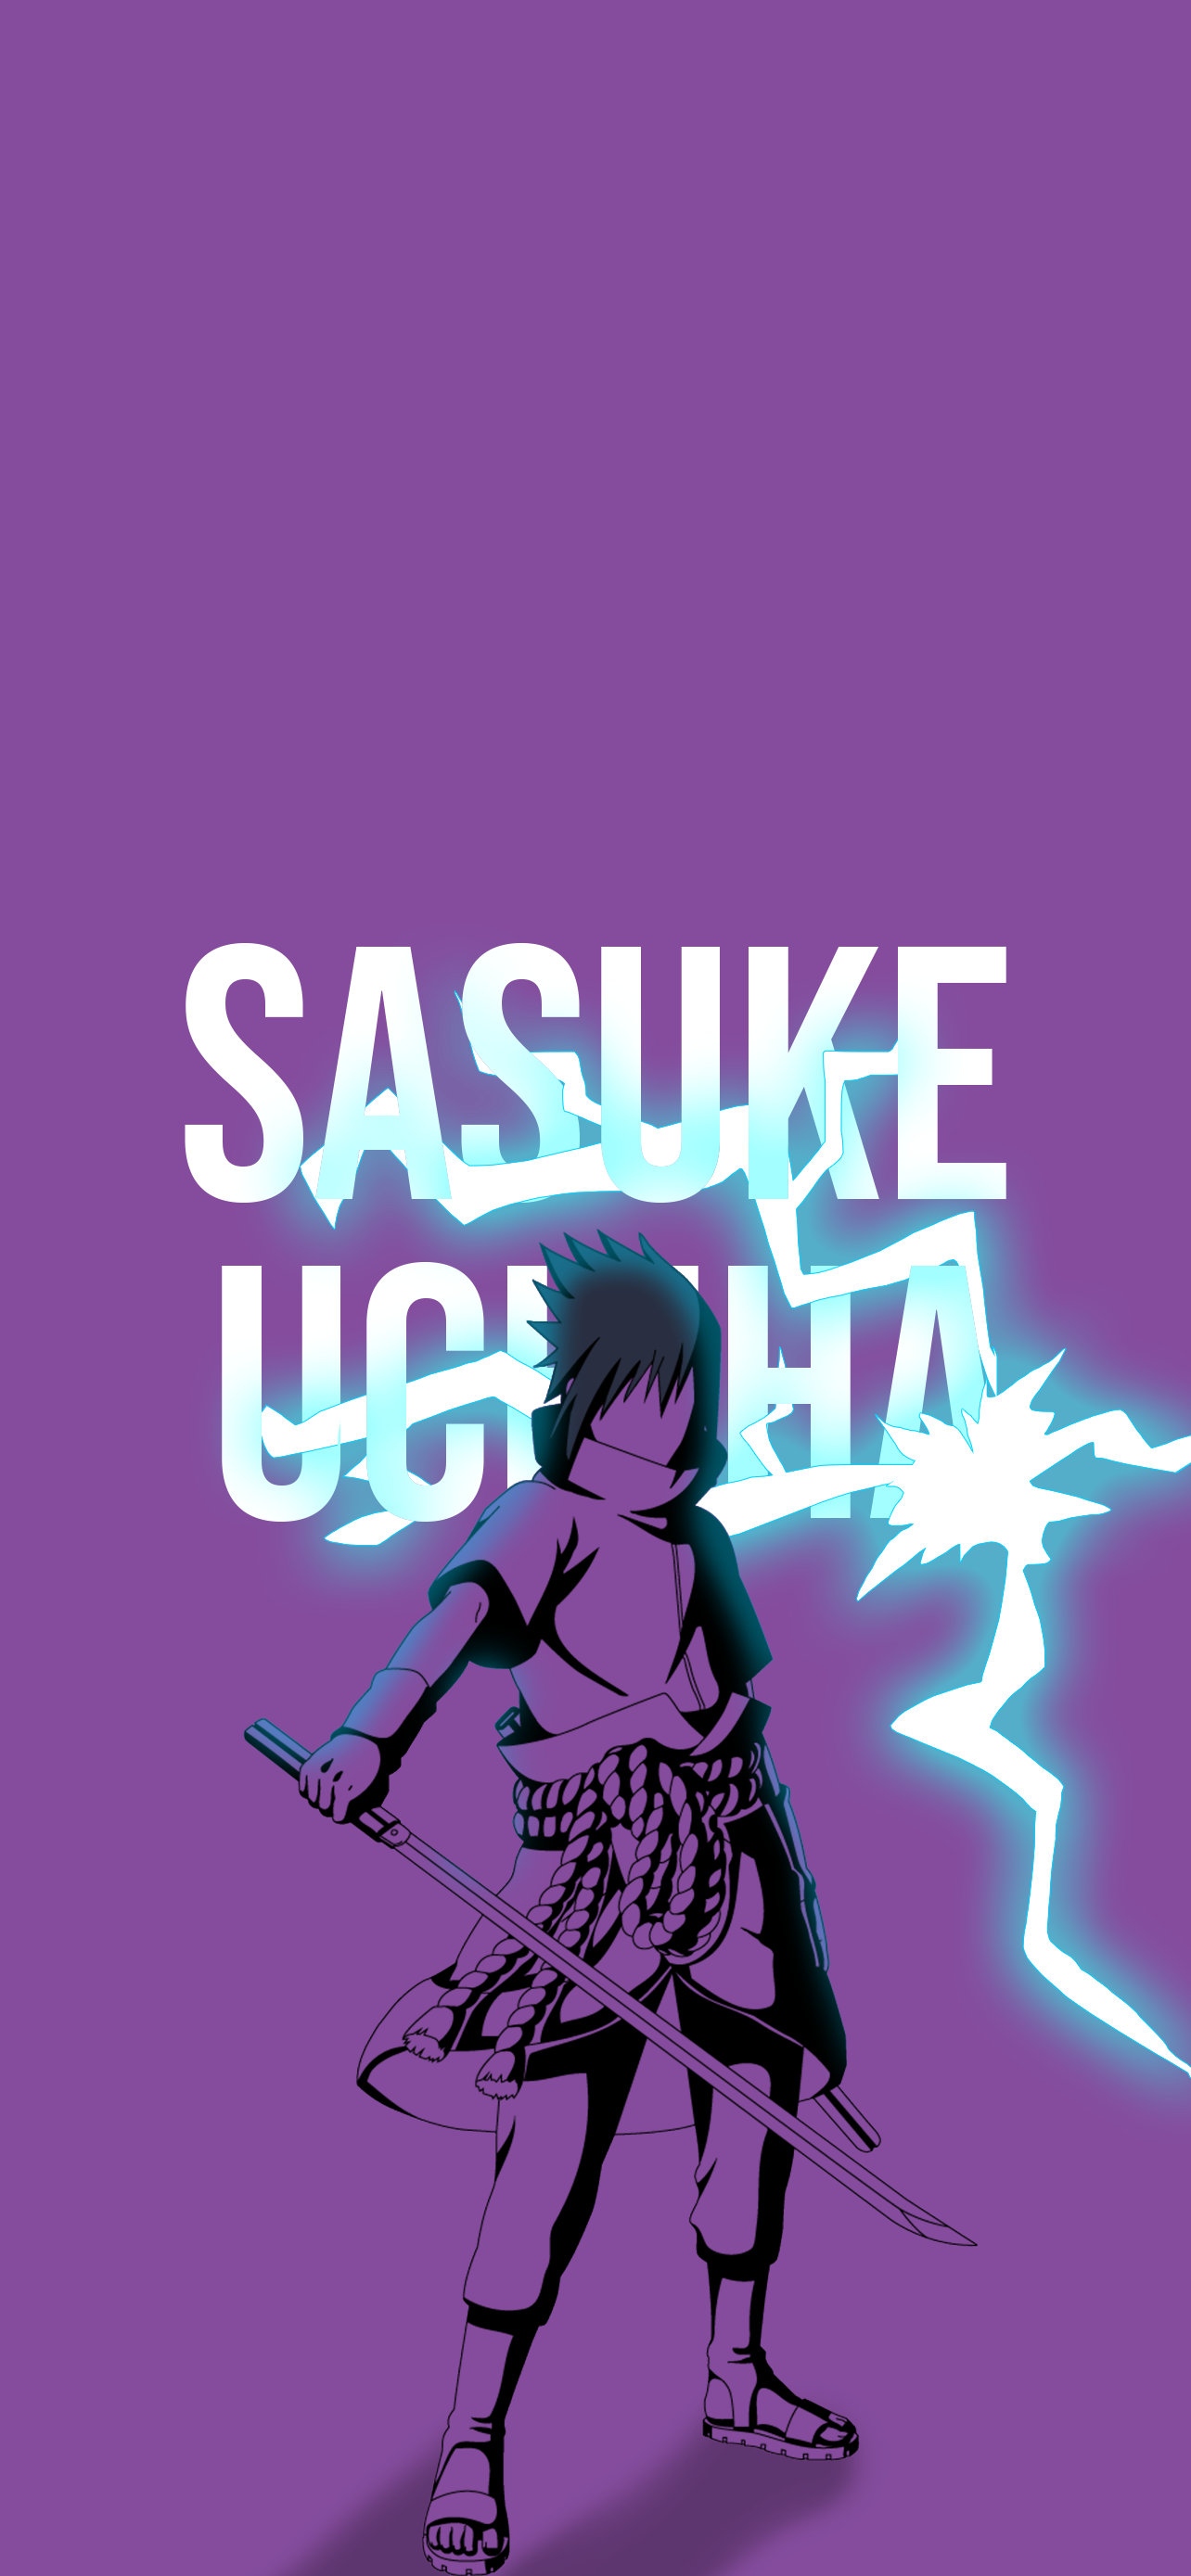 Sasuke Uchiha 2 by ChanwicheDeQueso